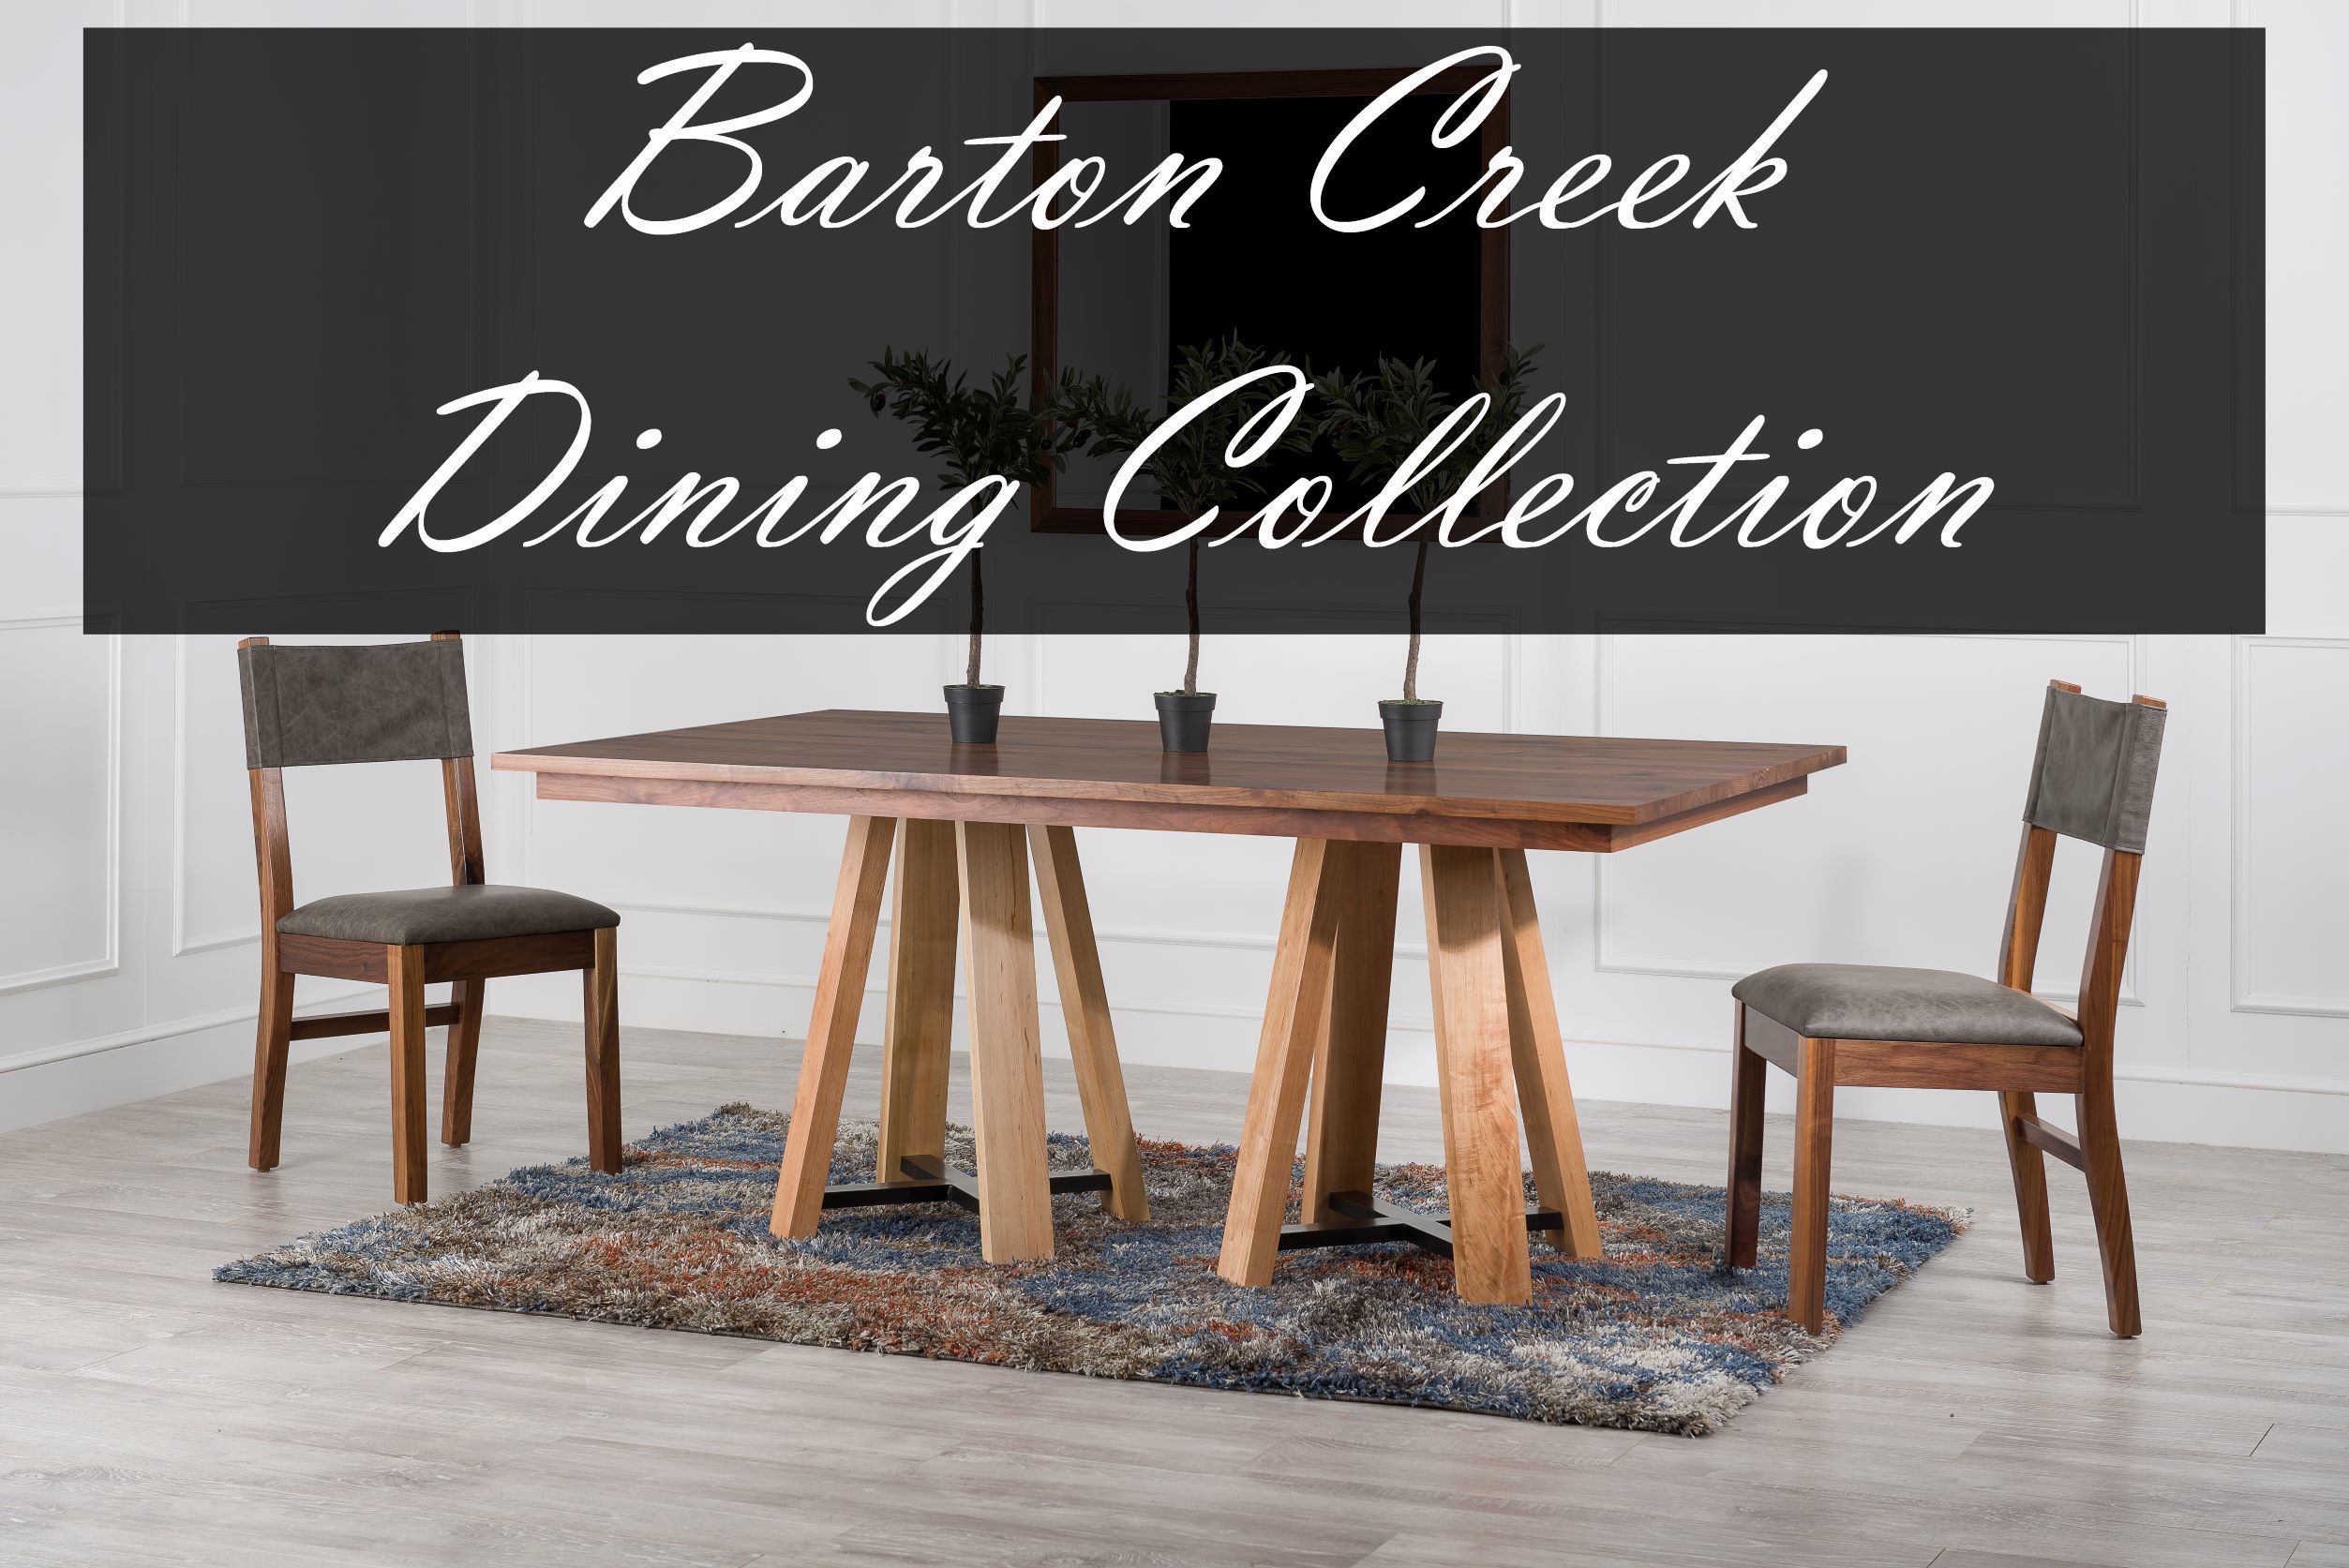 Barton Creek Dining Collection